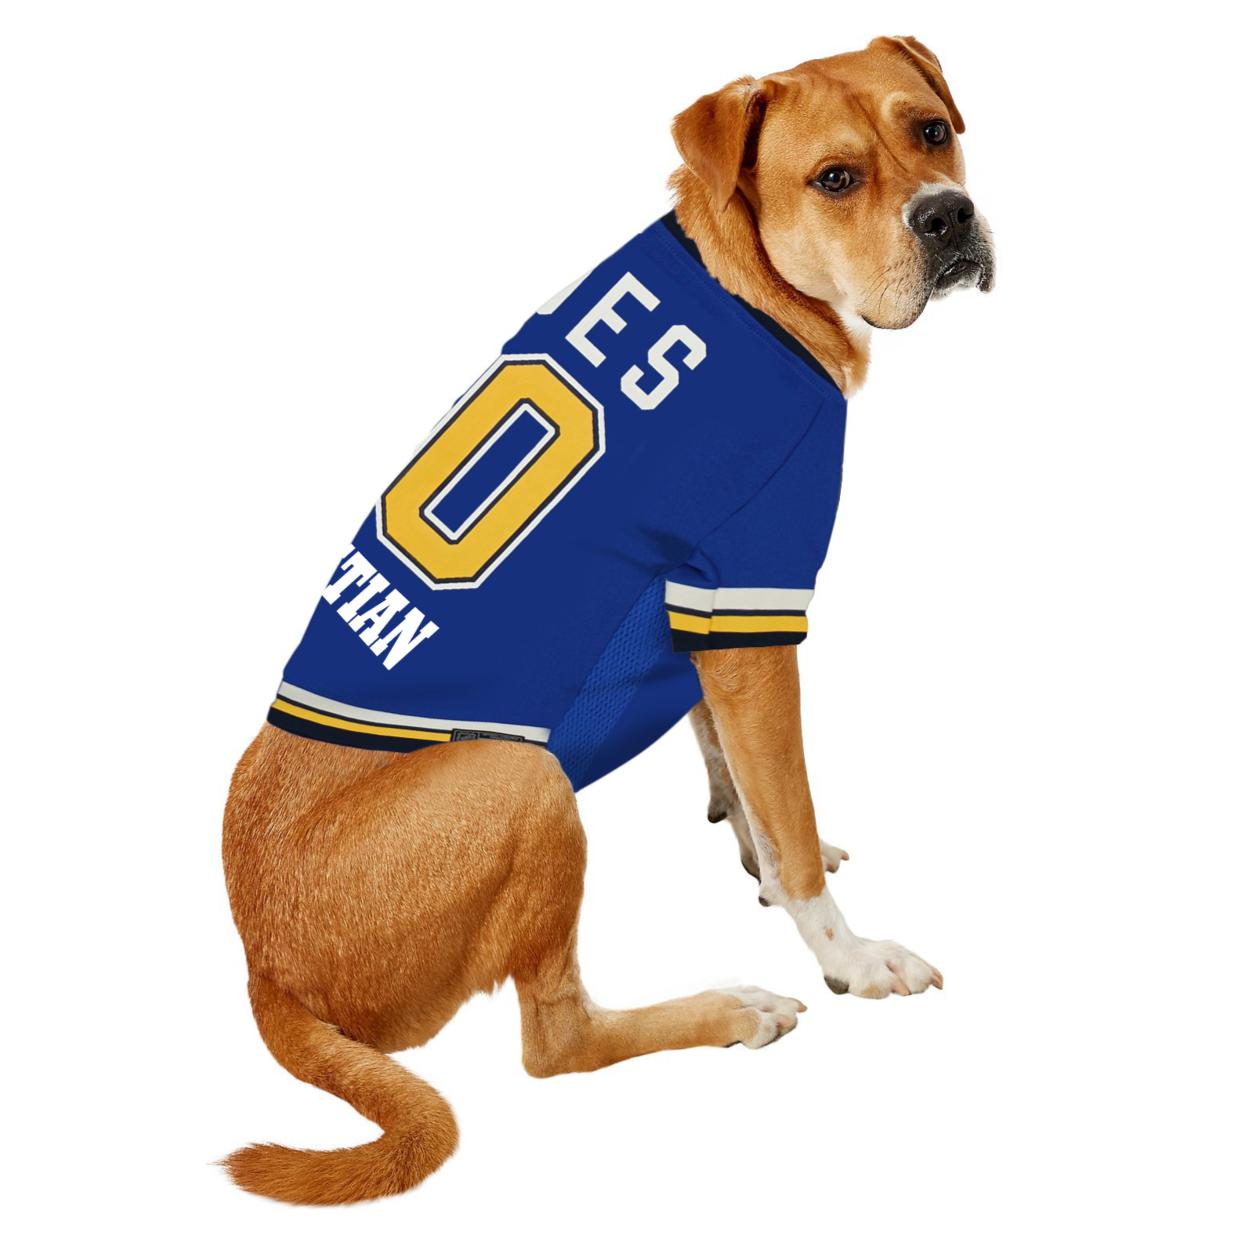 washington capitals dog jersey